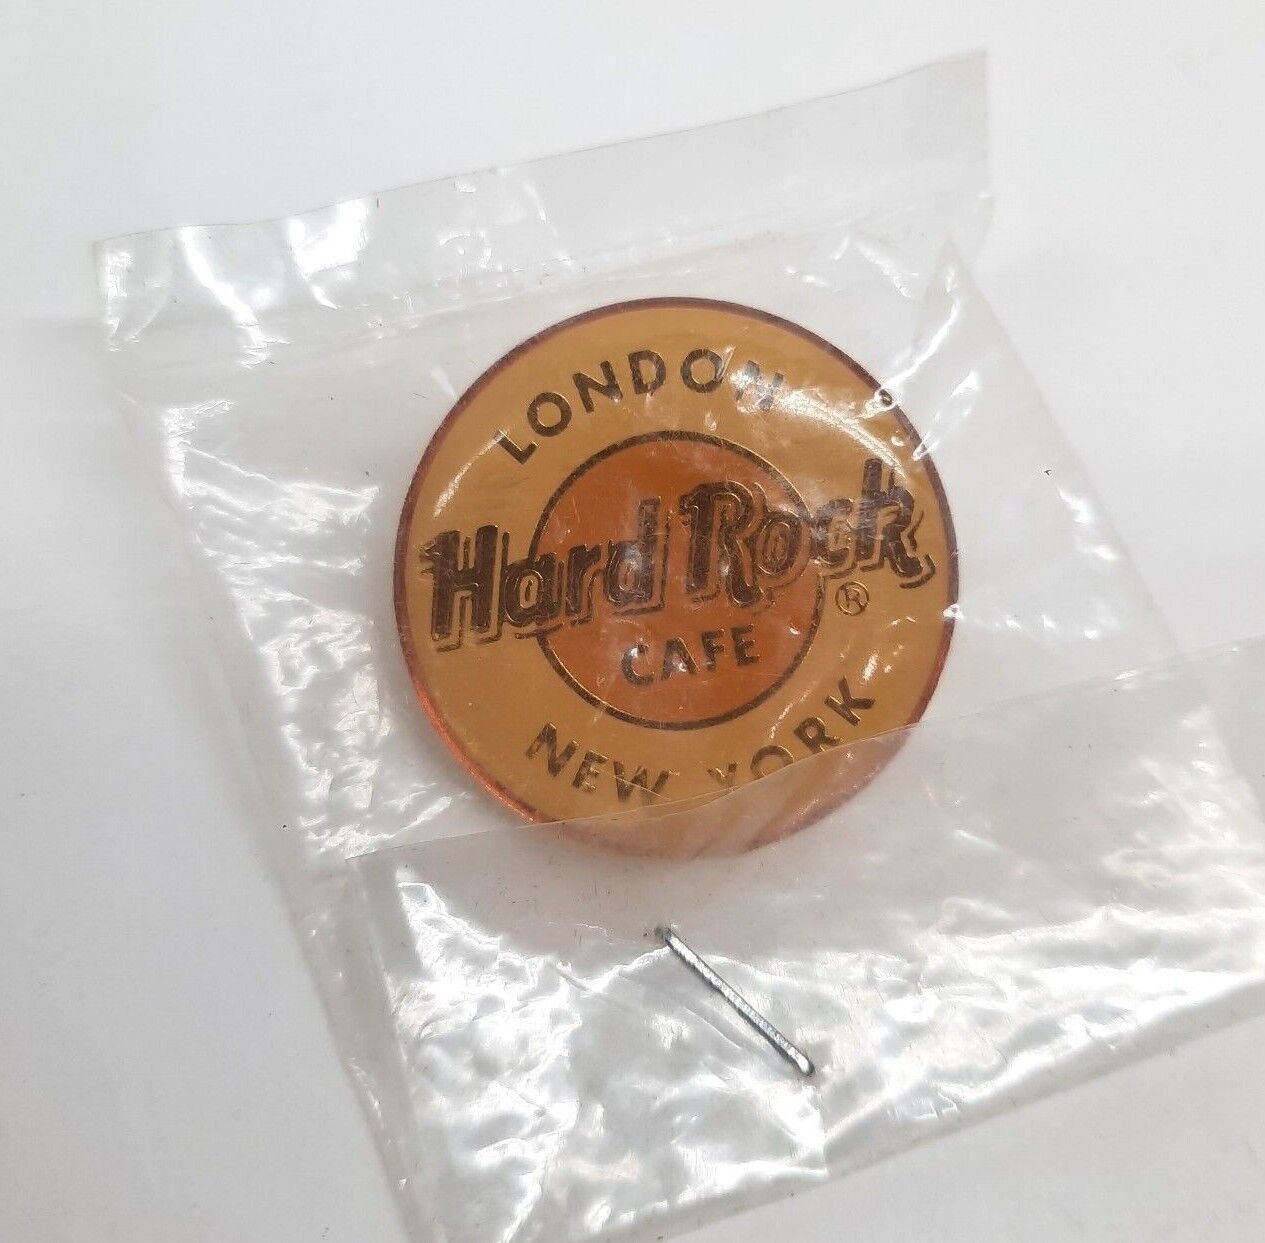 Hard Rock Cafe Opening London New York Staff Pin Rare Nos In Original Bag